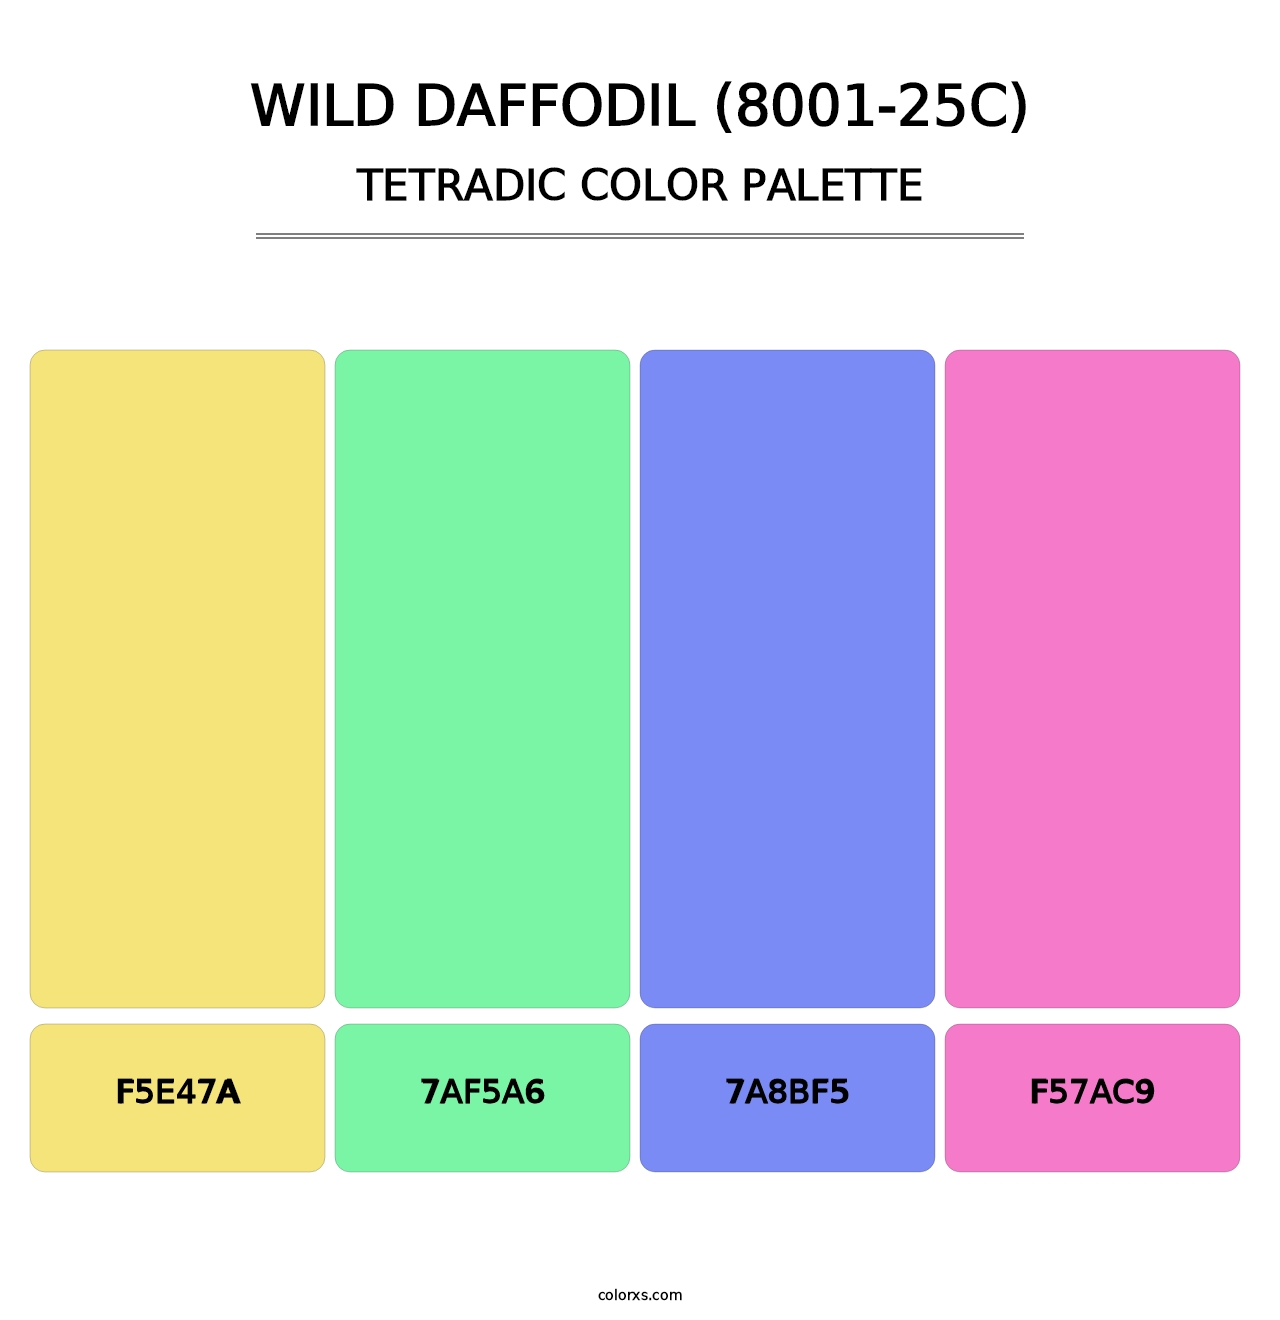 Wild Daffodil (8001-25C) - Tetradic Color Palette